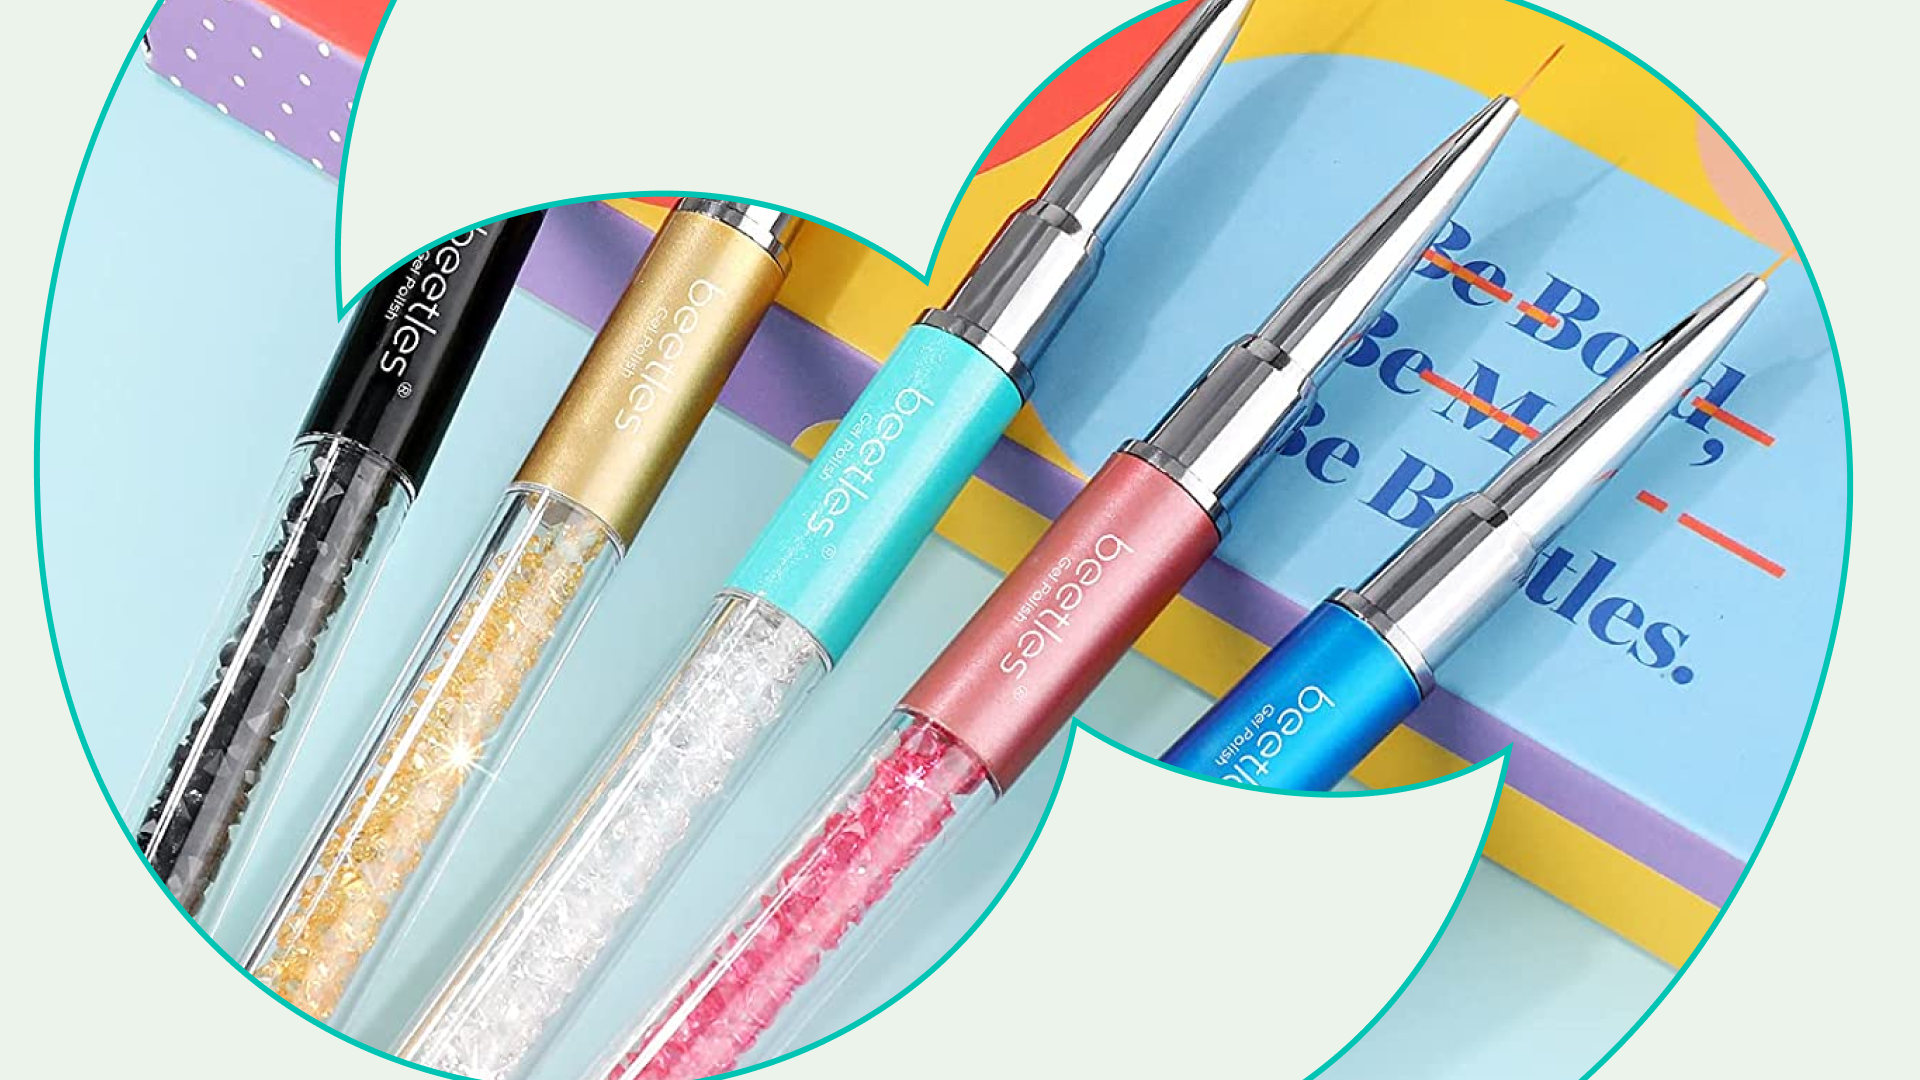 Nail Art Liner Brushes, Beetles UV Gel Painting Nail Art Design Brush Pen  Set